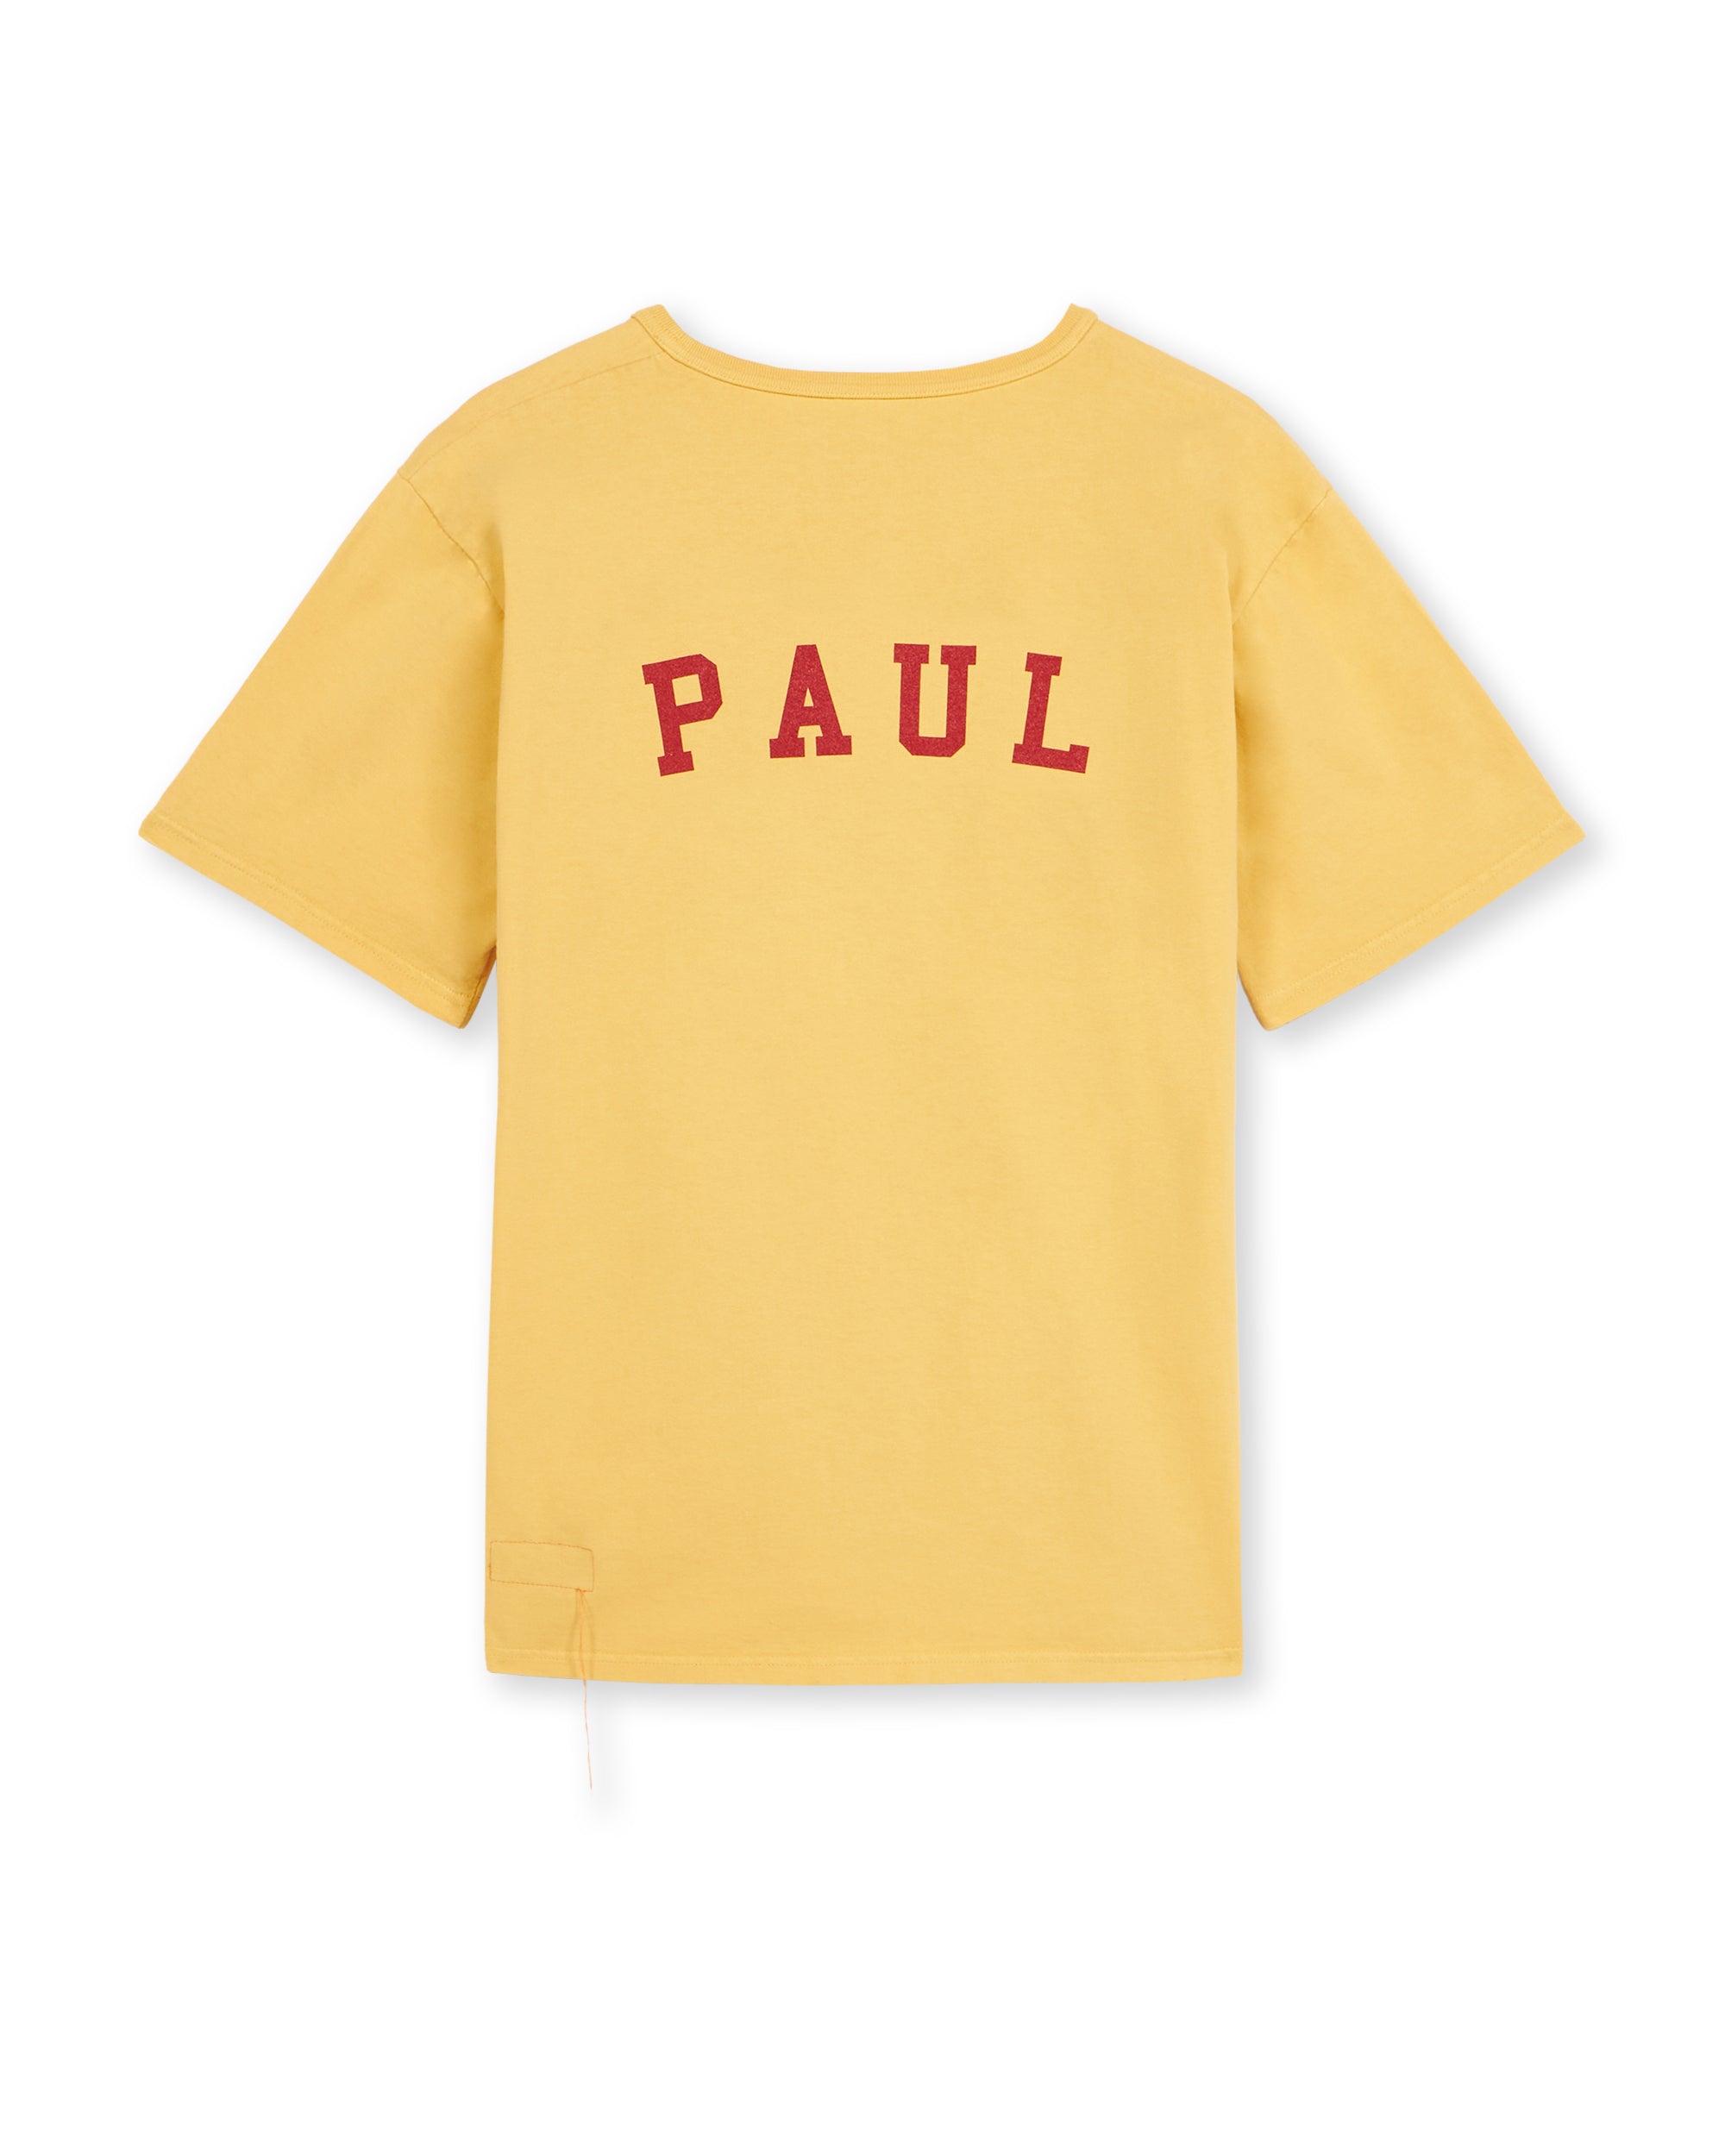 PAULT-99100              YEL